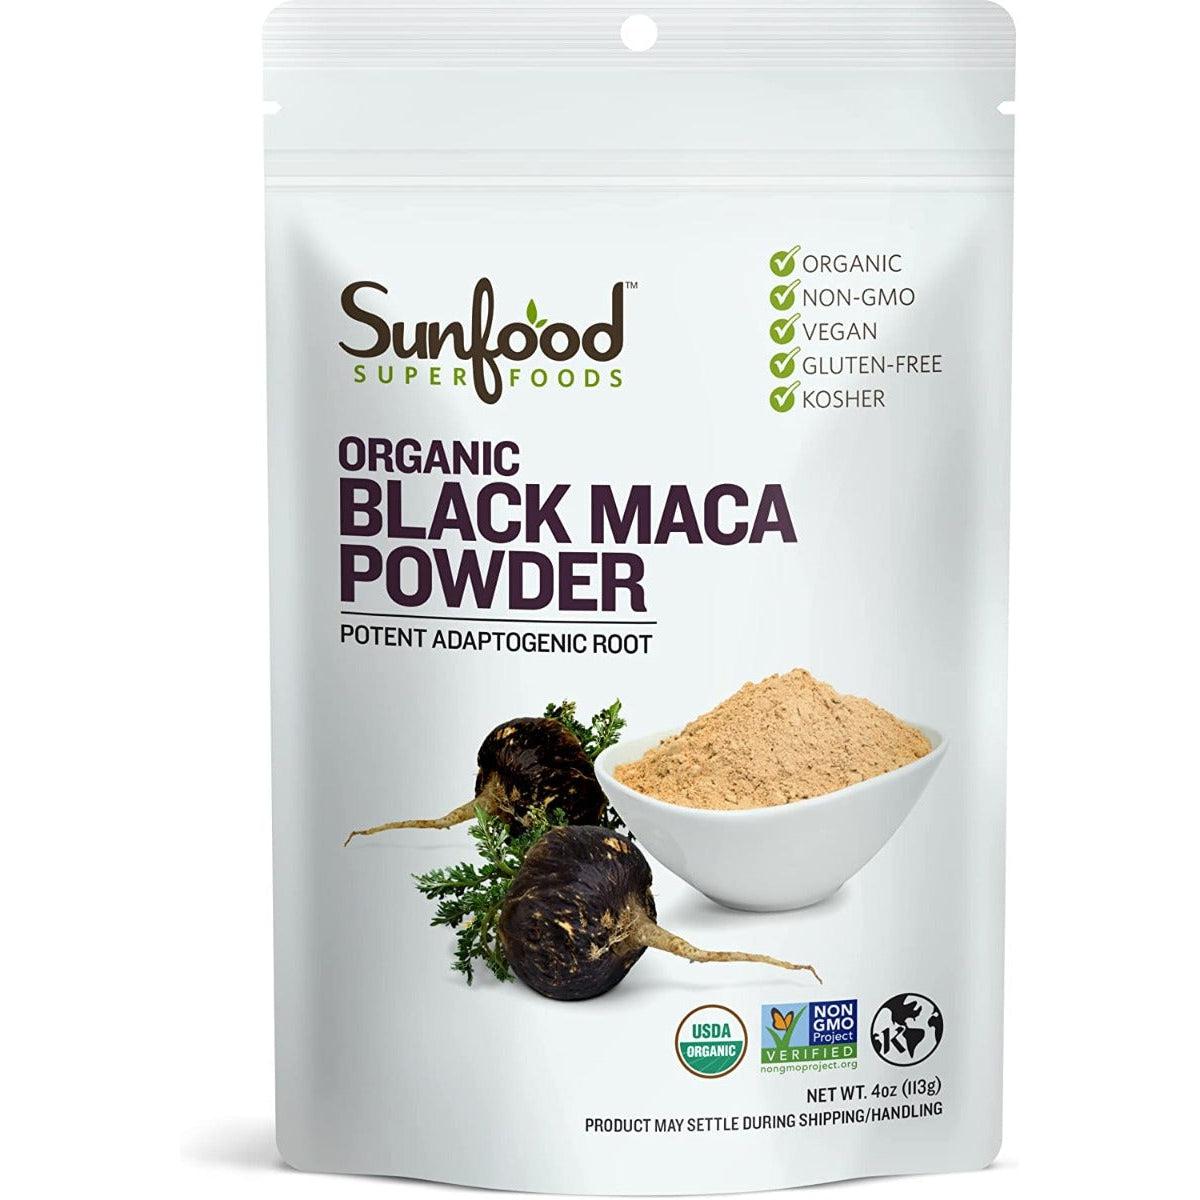 Sunfood Superfoods Organic Black Maca Powder 113g